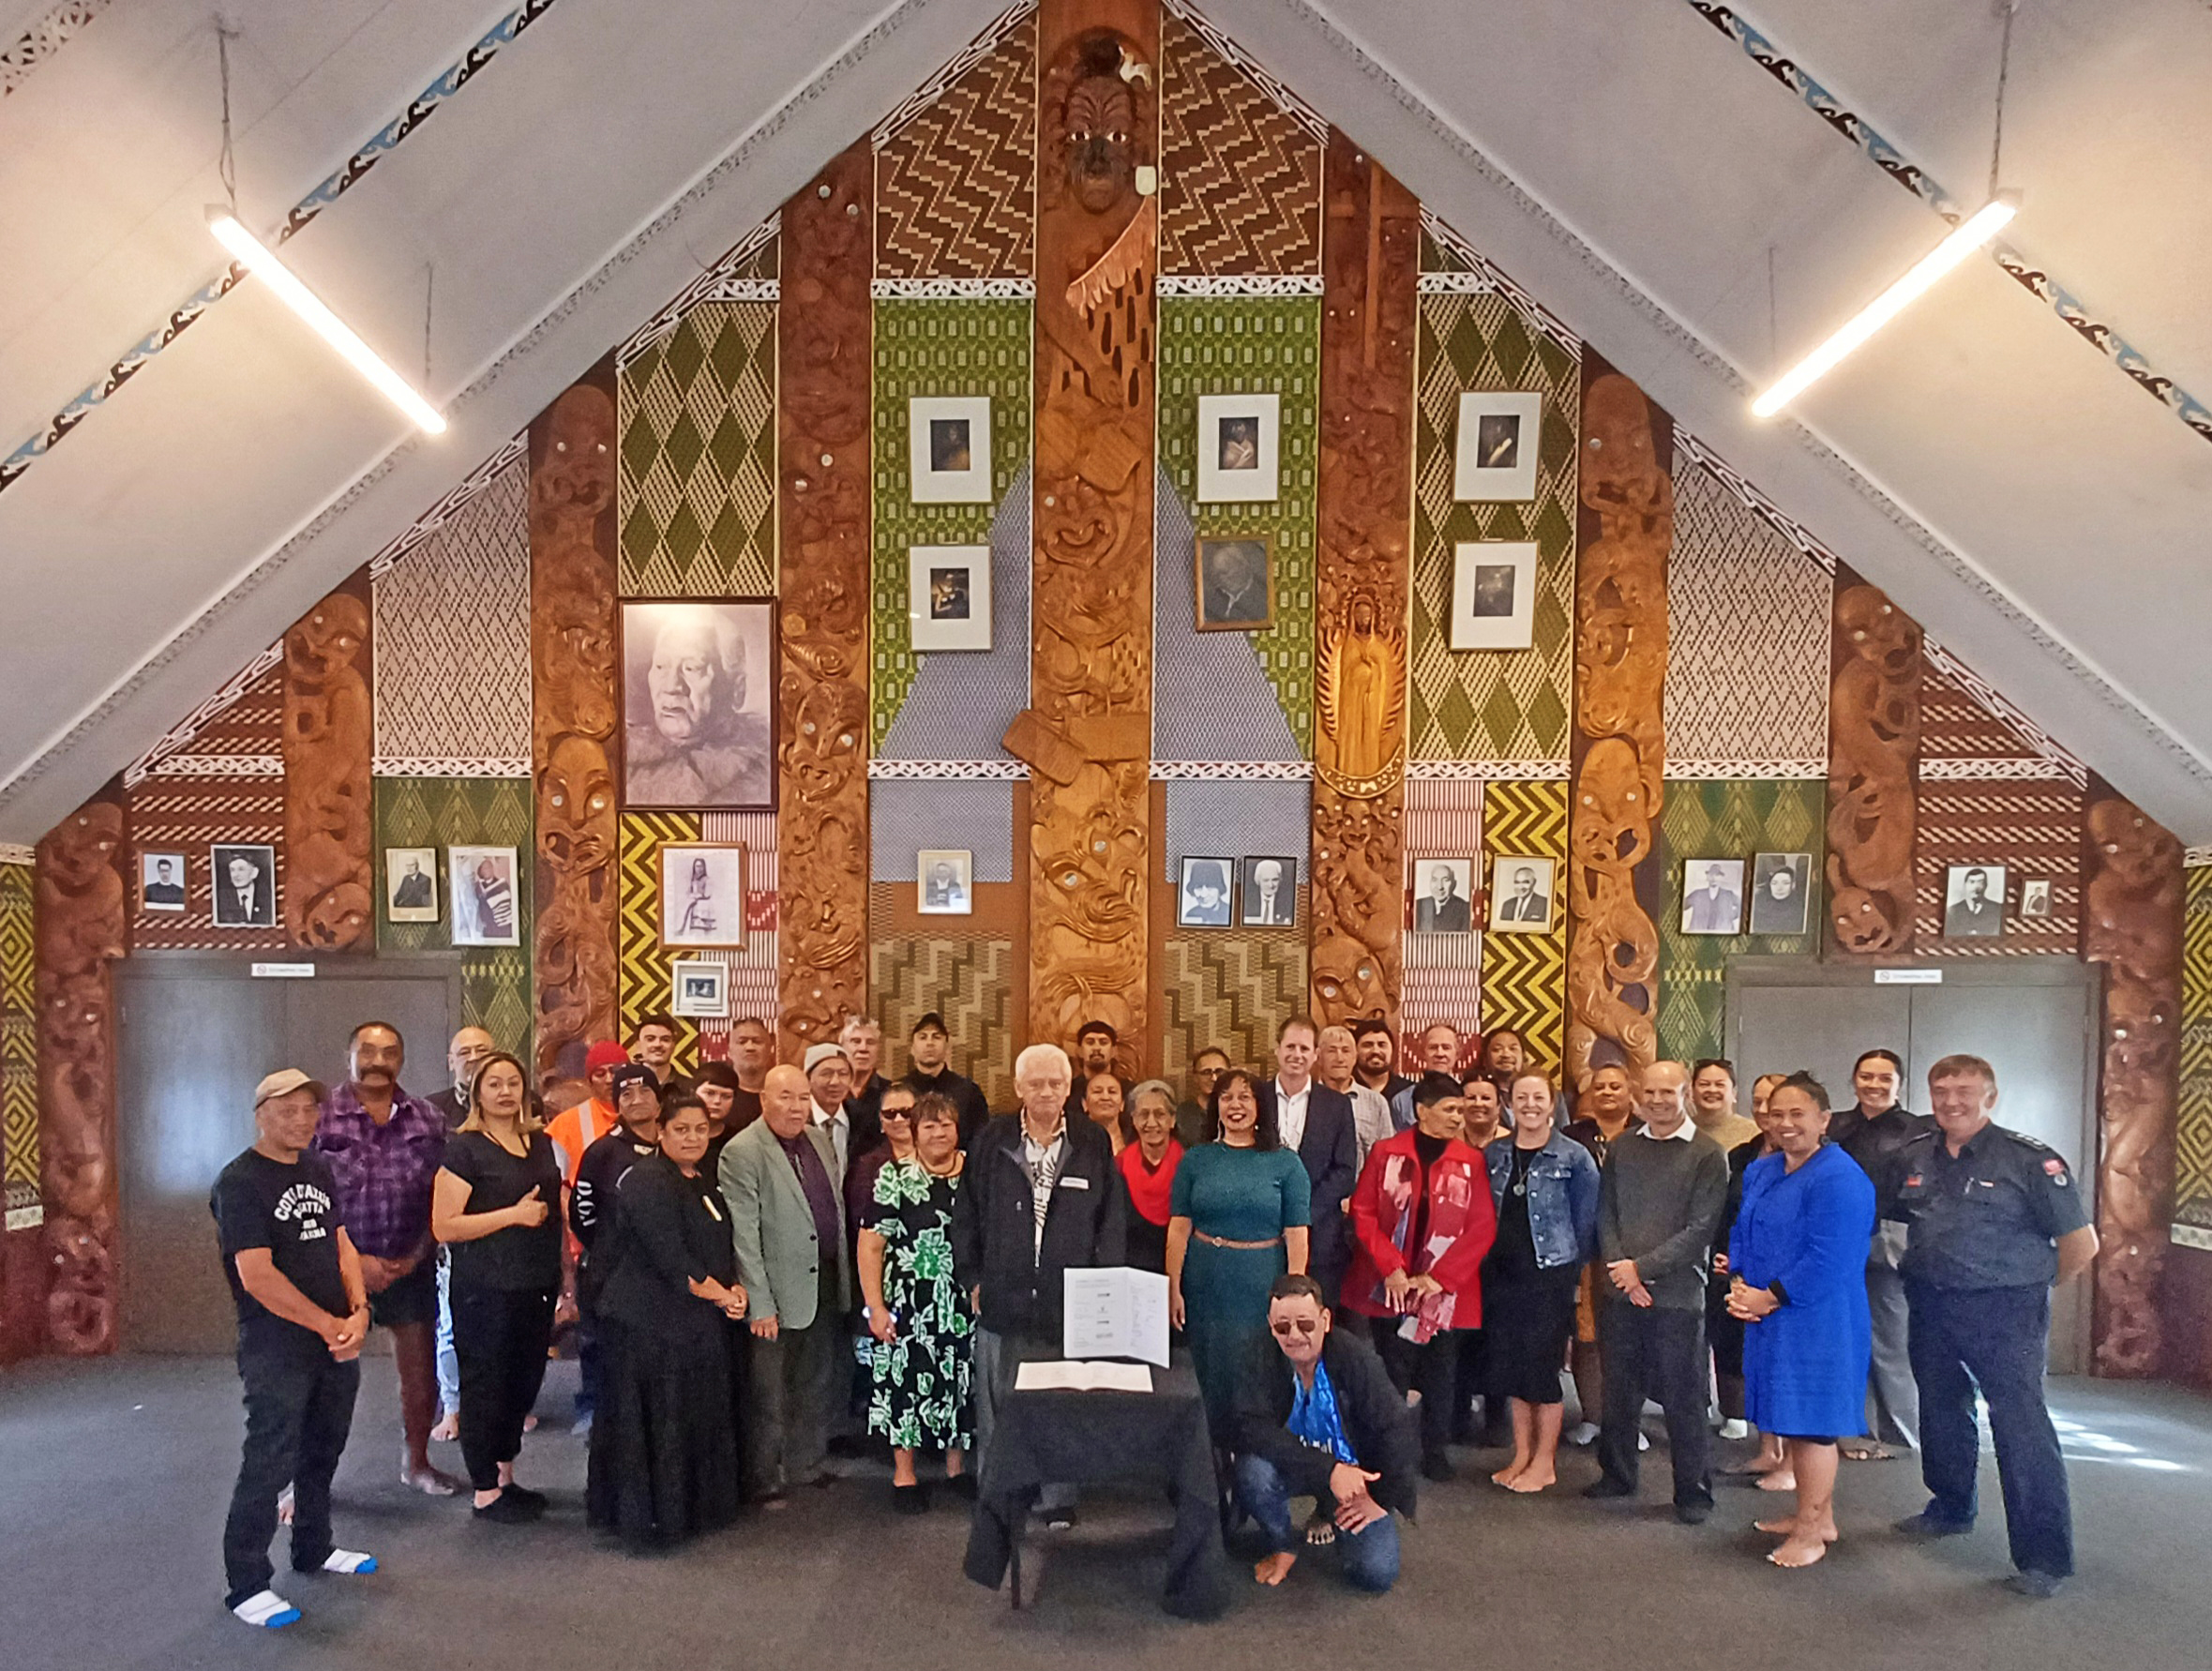 Representatives of Te Parawhau ki Tai and Northland Regional Council at Kākā Porowini Marae, Whangārei.